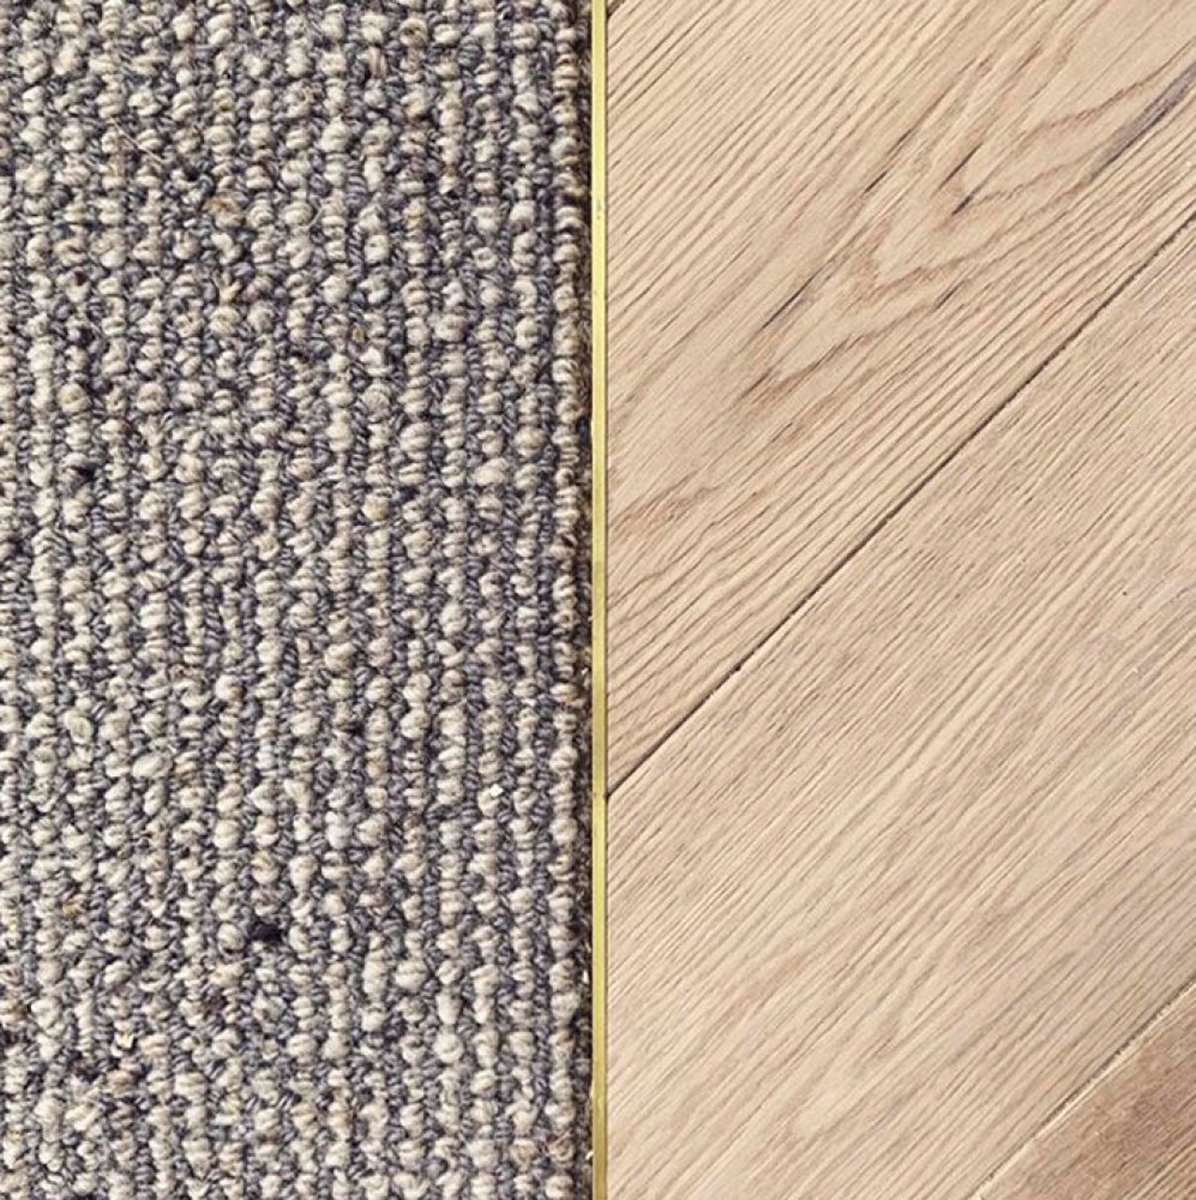 Timber to carpet